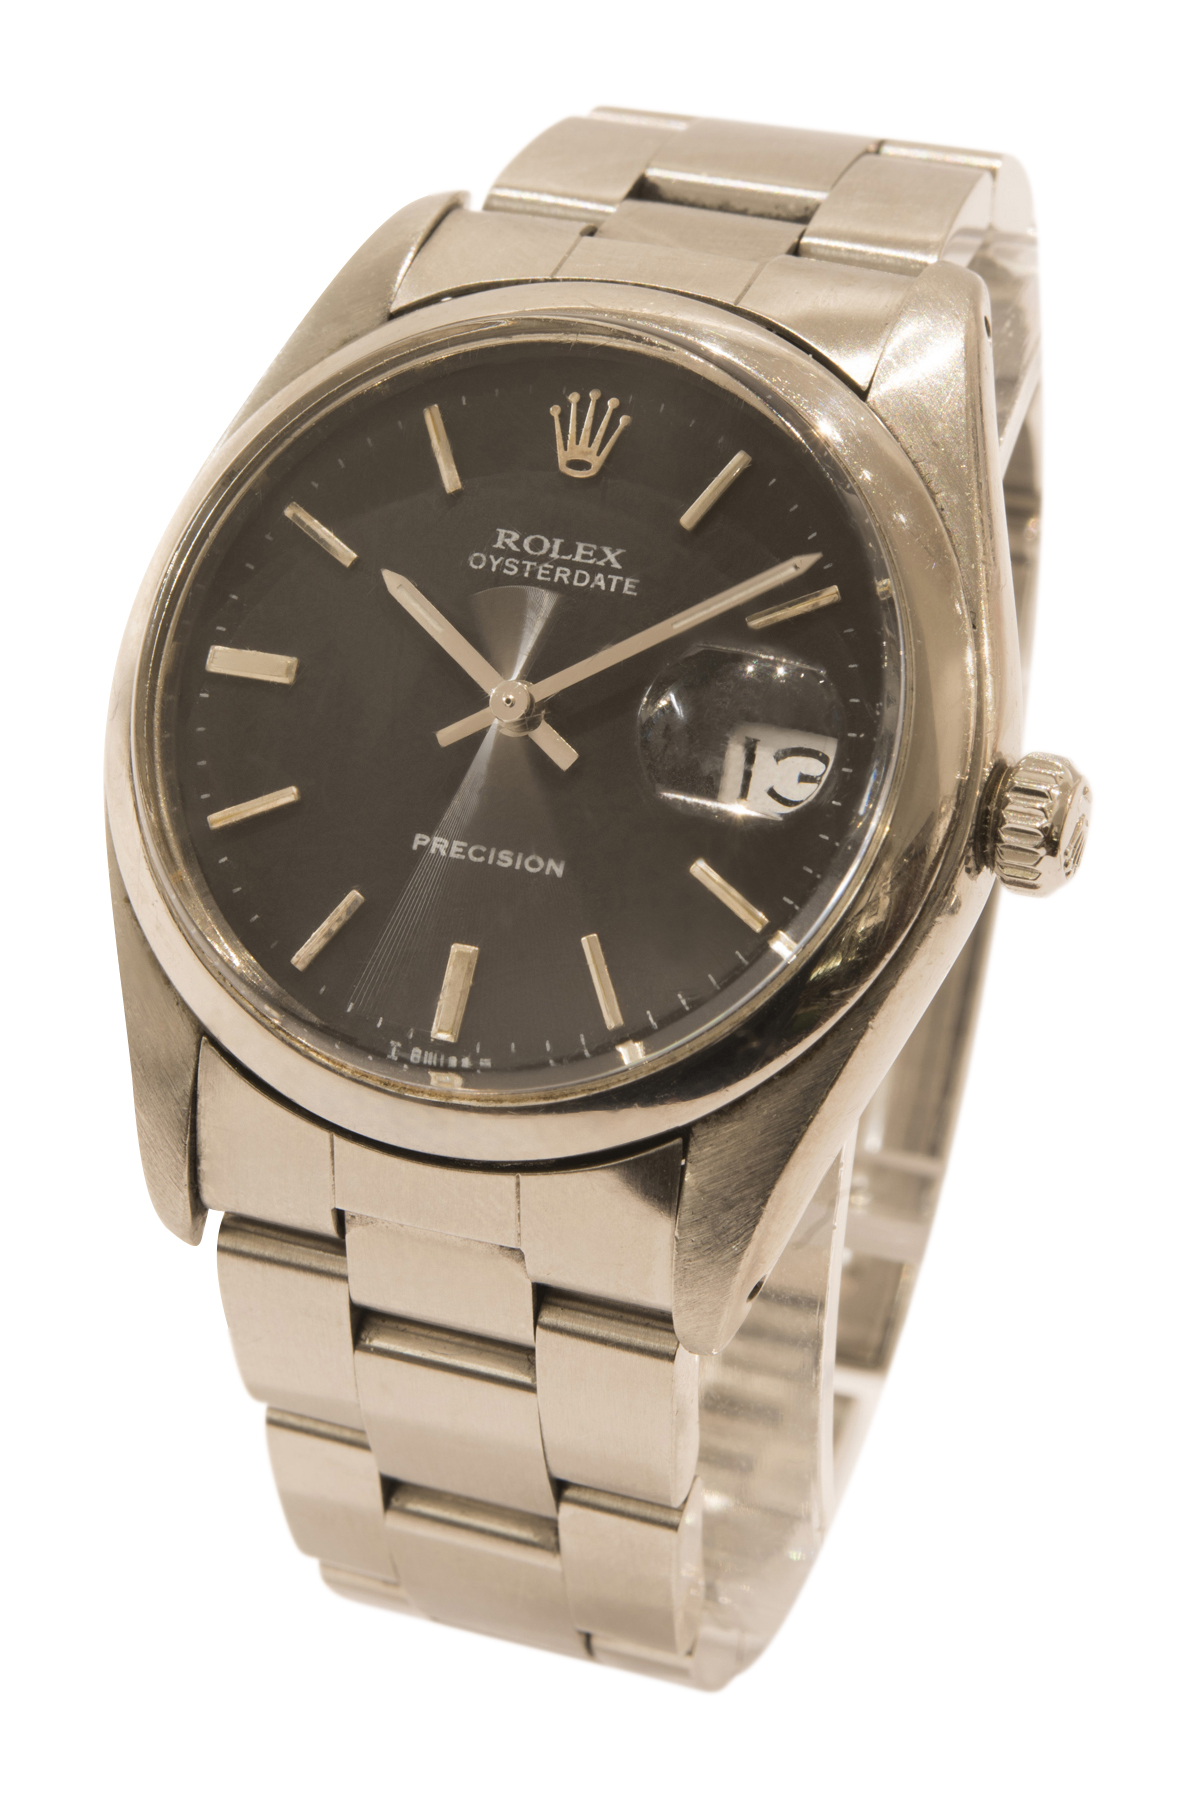 Rolex Oysterdate Precision Steel watch - Image 2 of 5